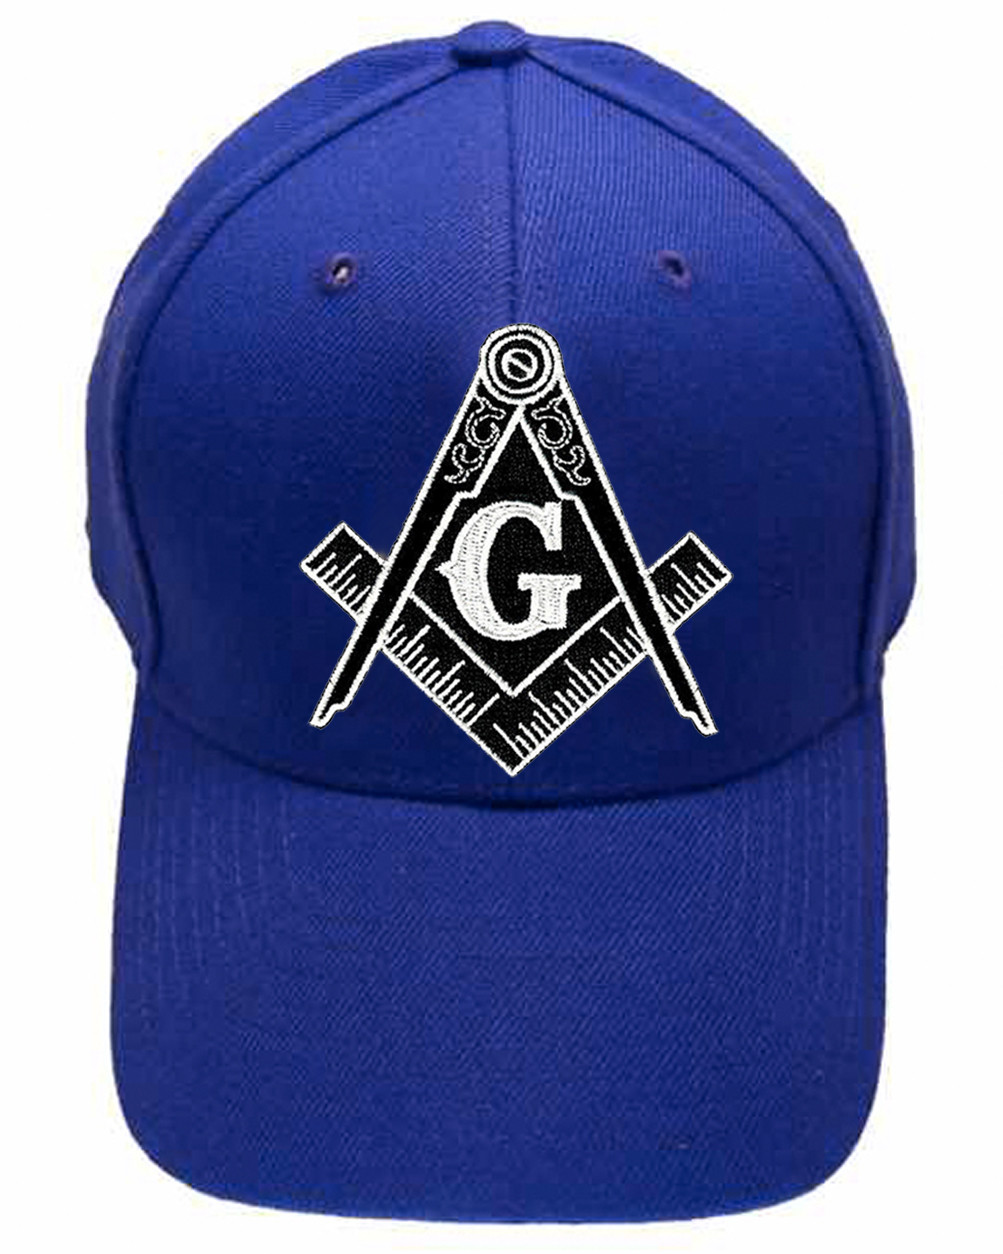 8" Black Mason Masonic Freemason Gold Symbol Snow Cap Beanie Skull Cap Hat